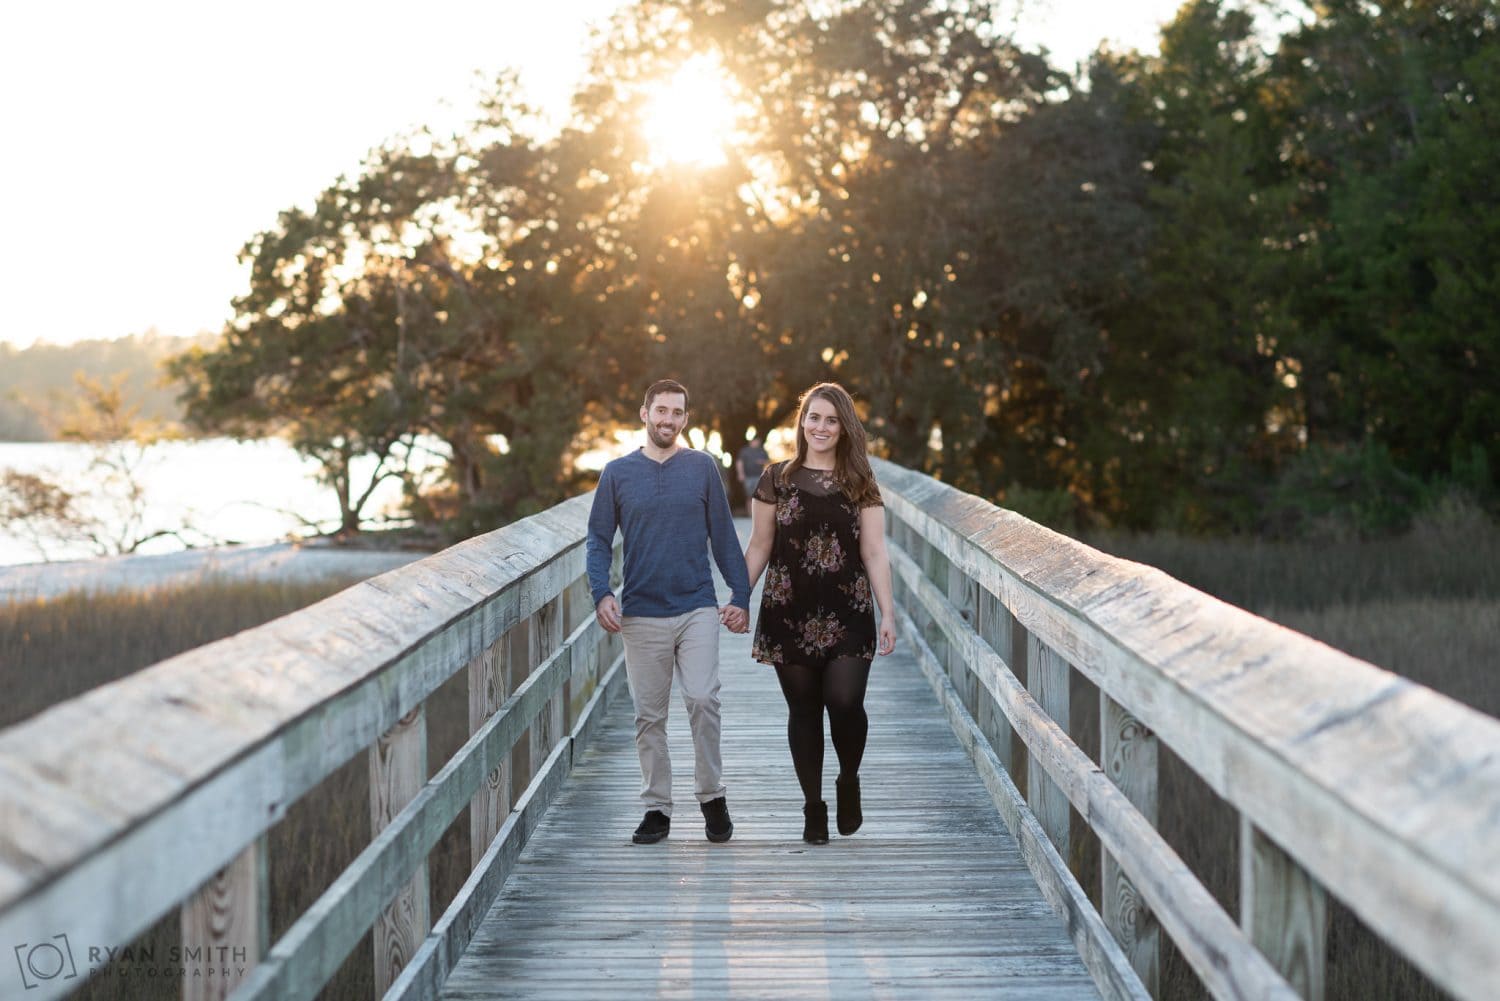 Holding hands walking down the boardwalk backlit by the sun Vereen Memorial Gardens